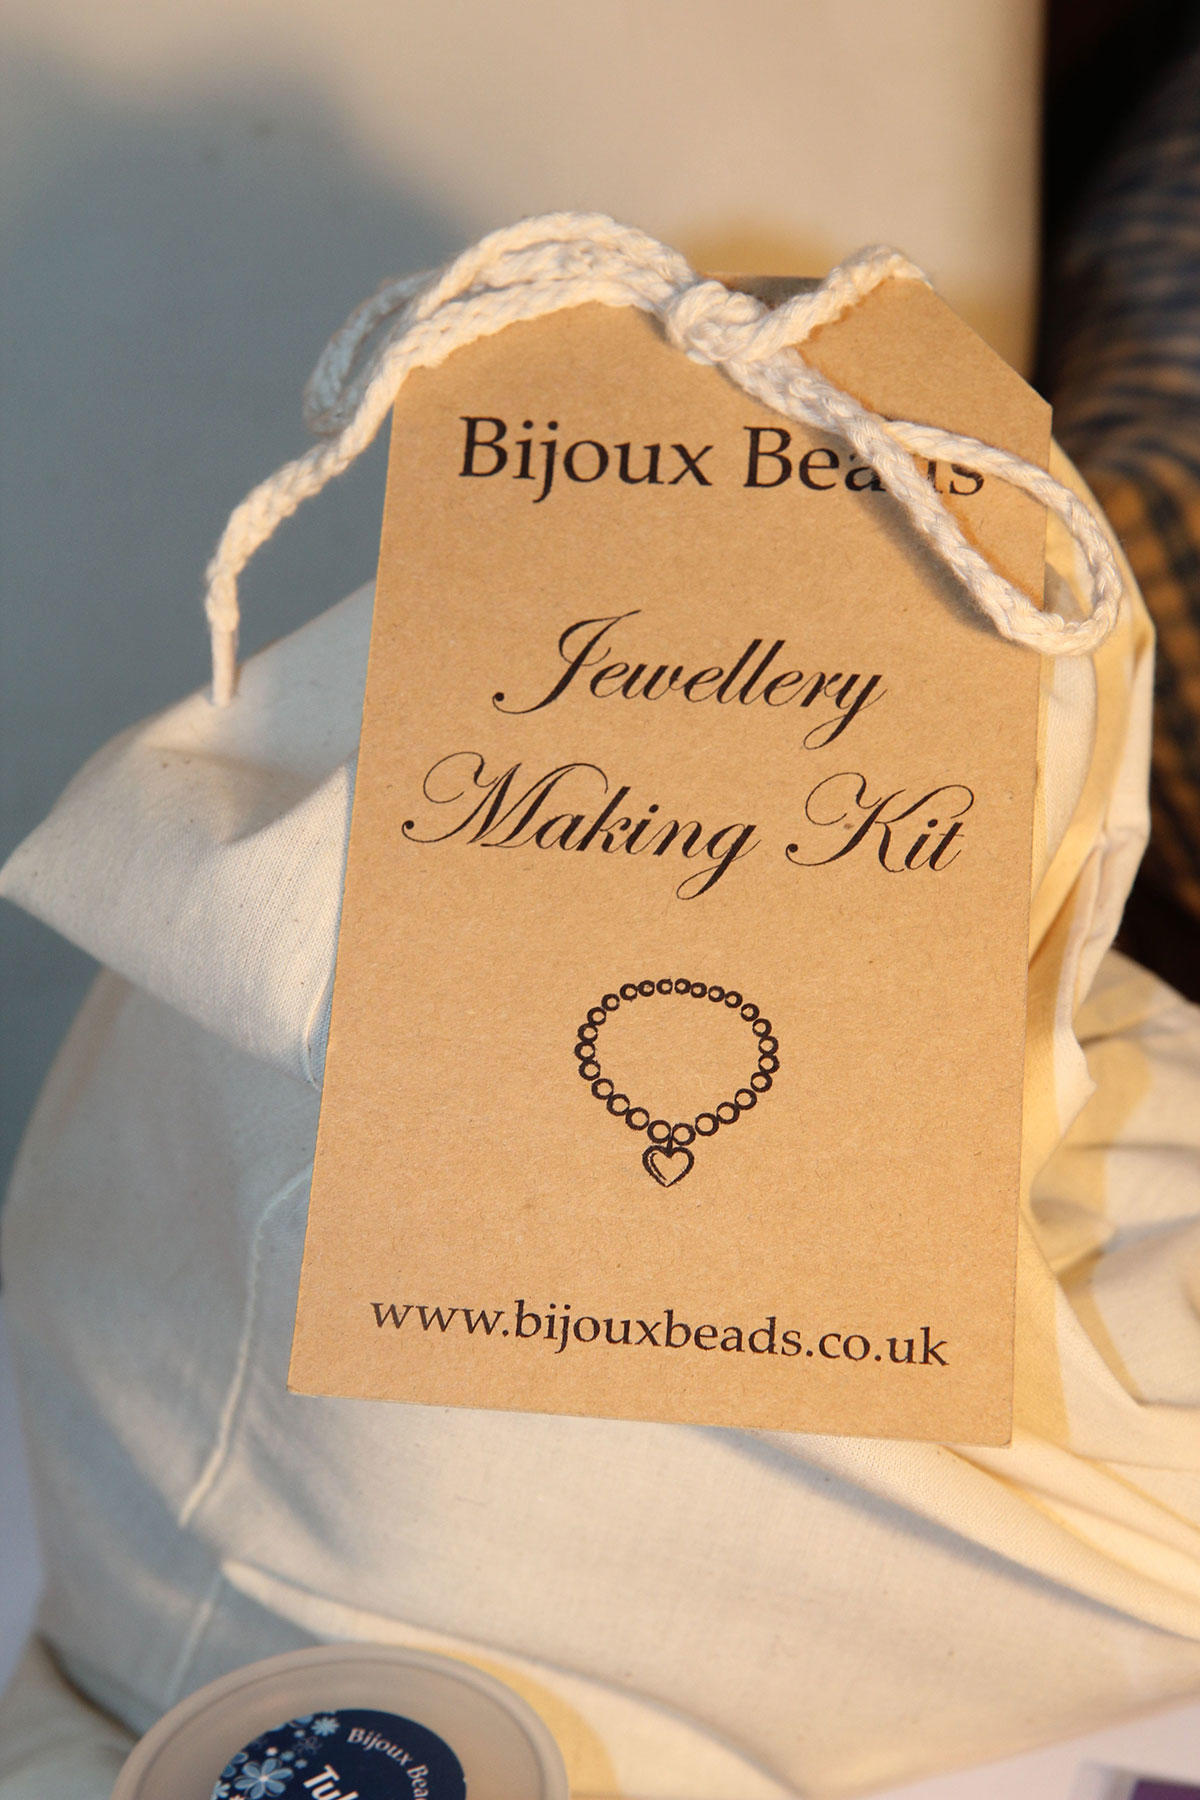 Starter Kit from Bijoux Beads